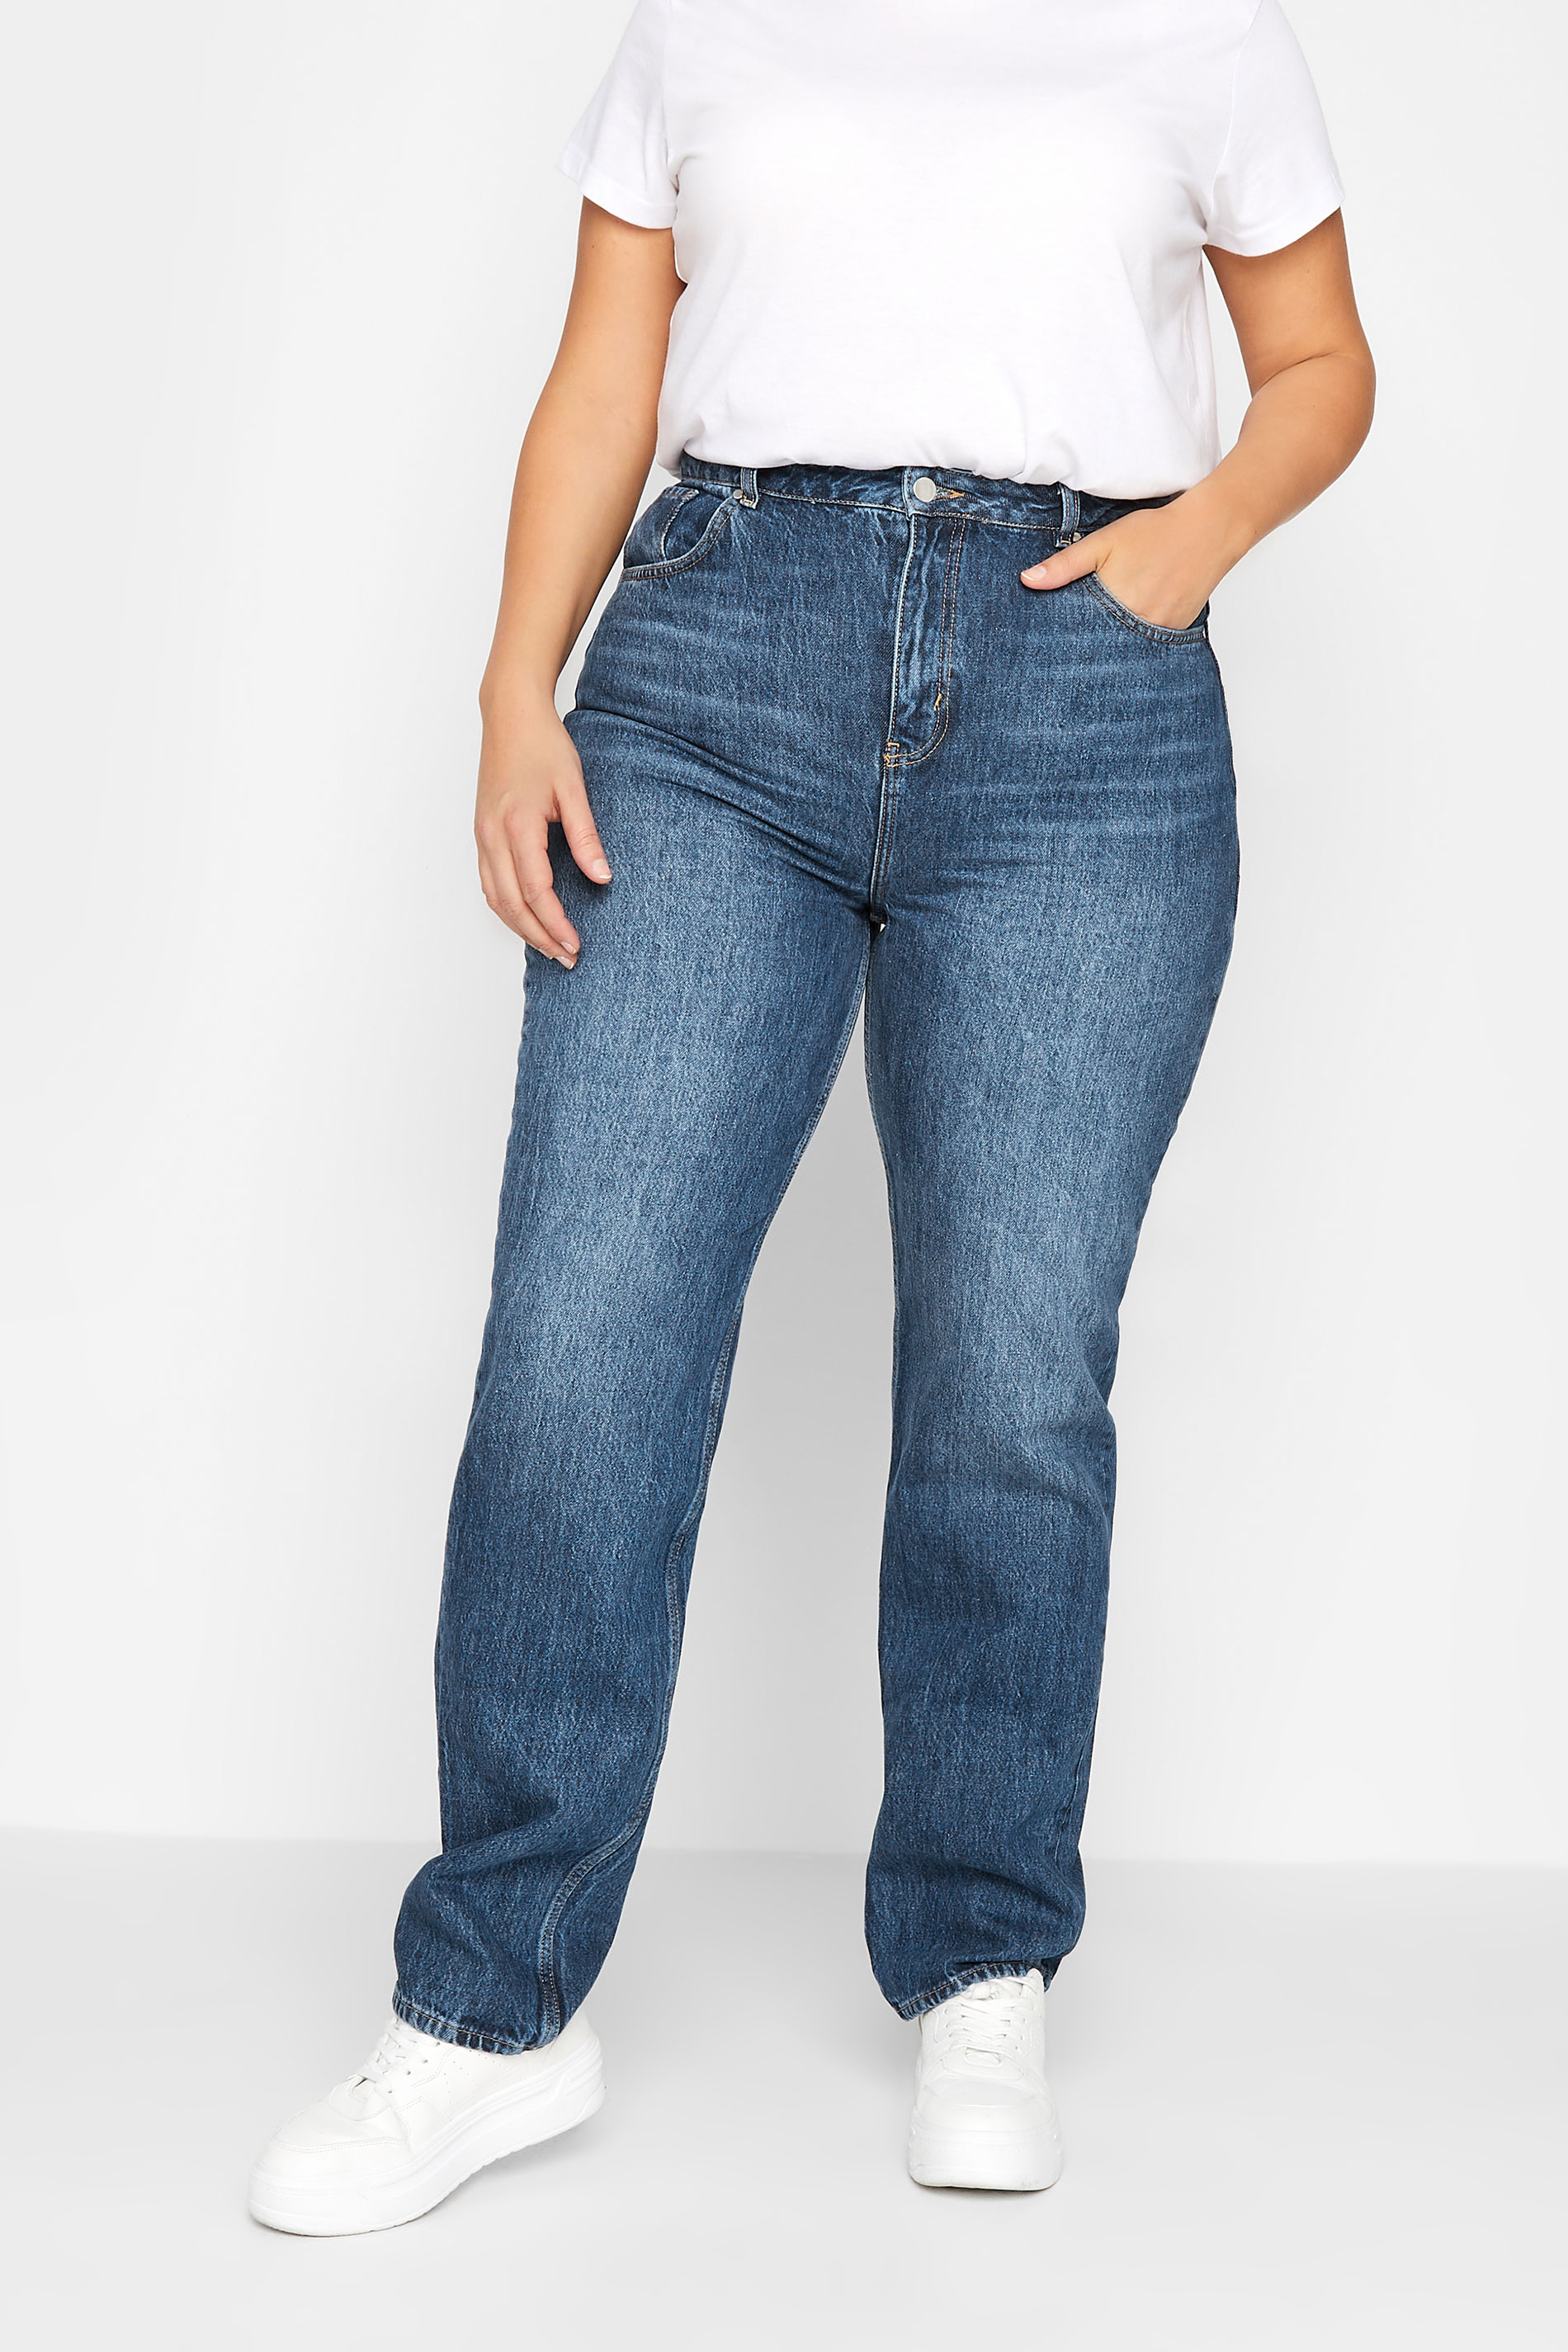 Tall Women's LTS Blue Mom Jeans | Long Tall Sally 1